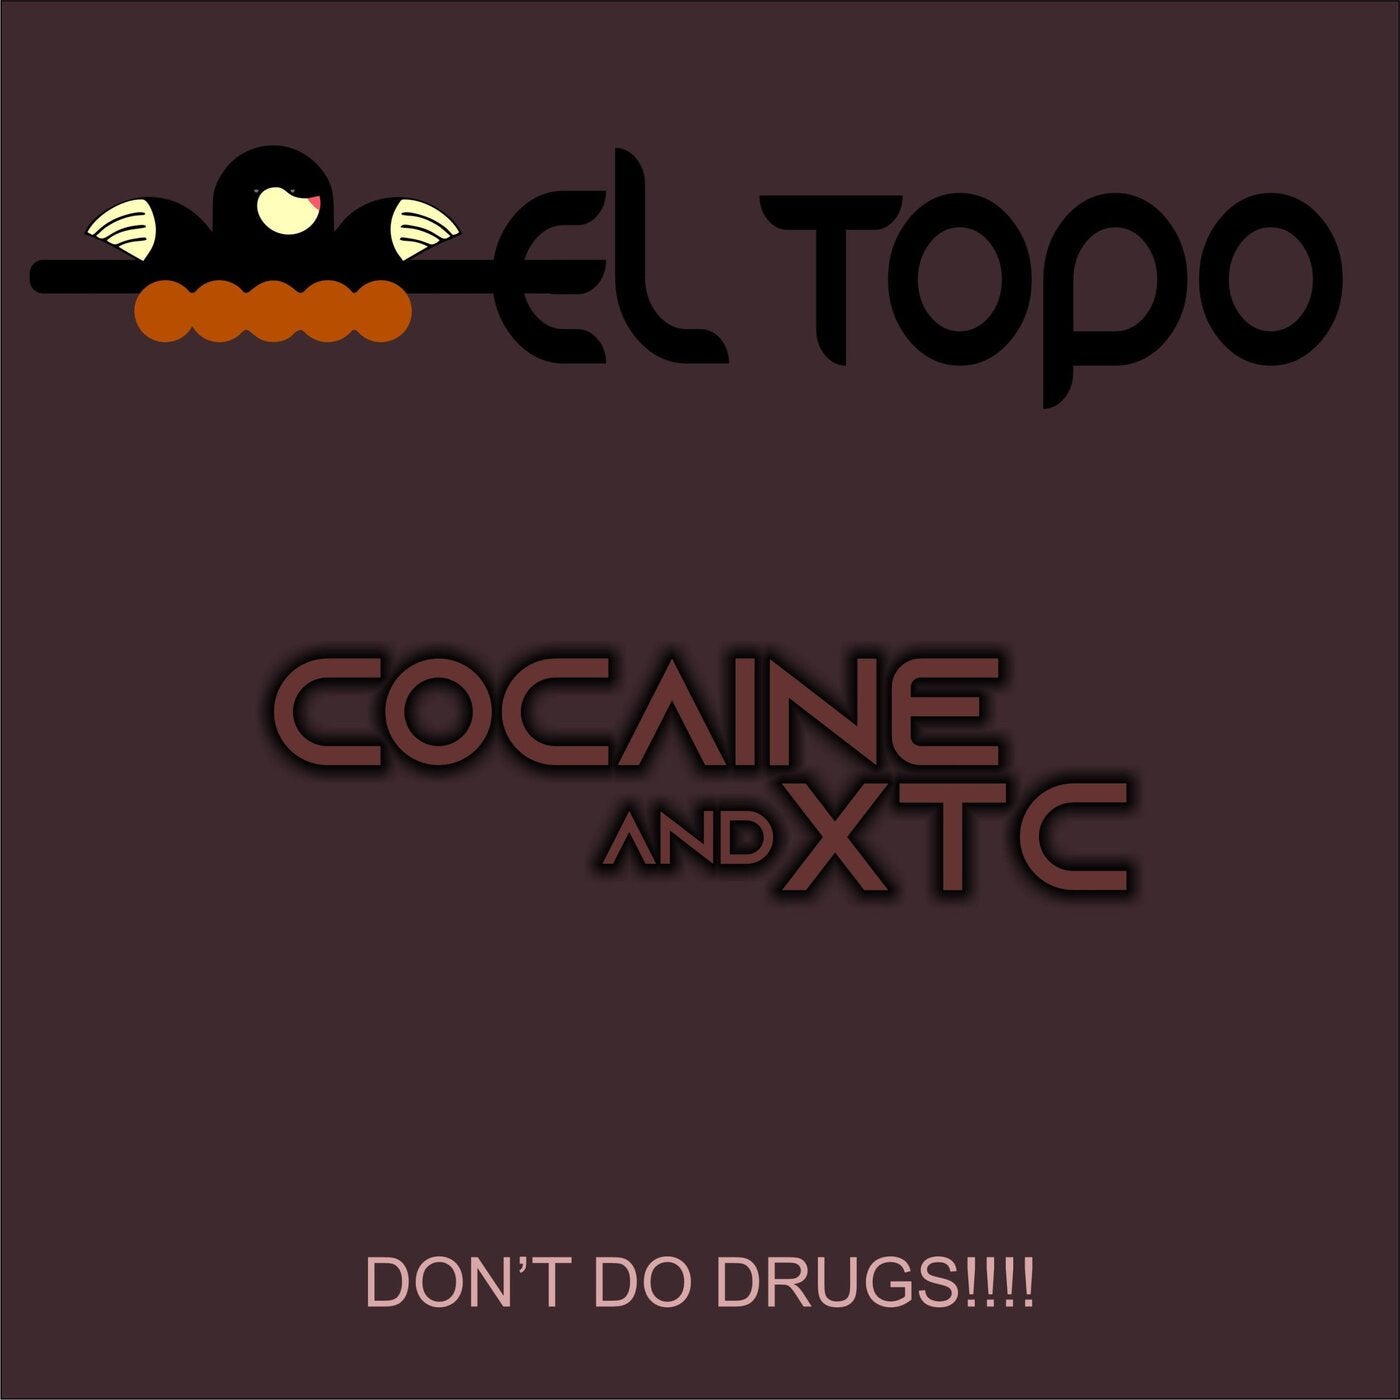 COCAINE AND XTC